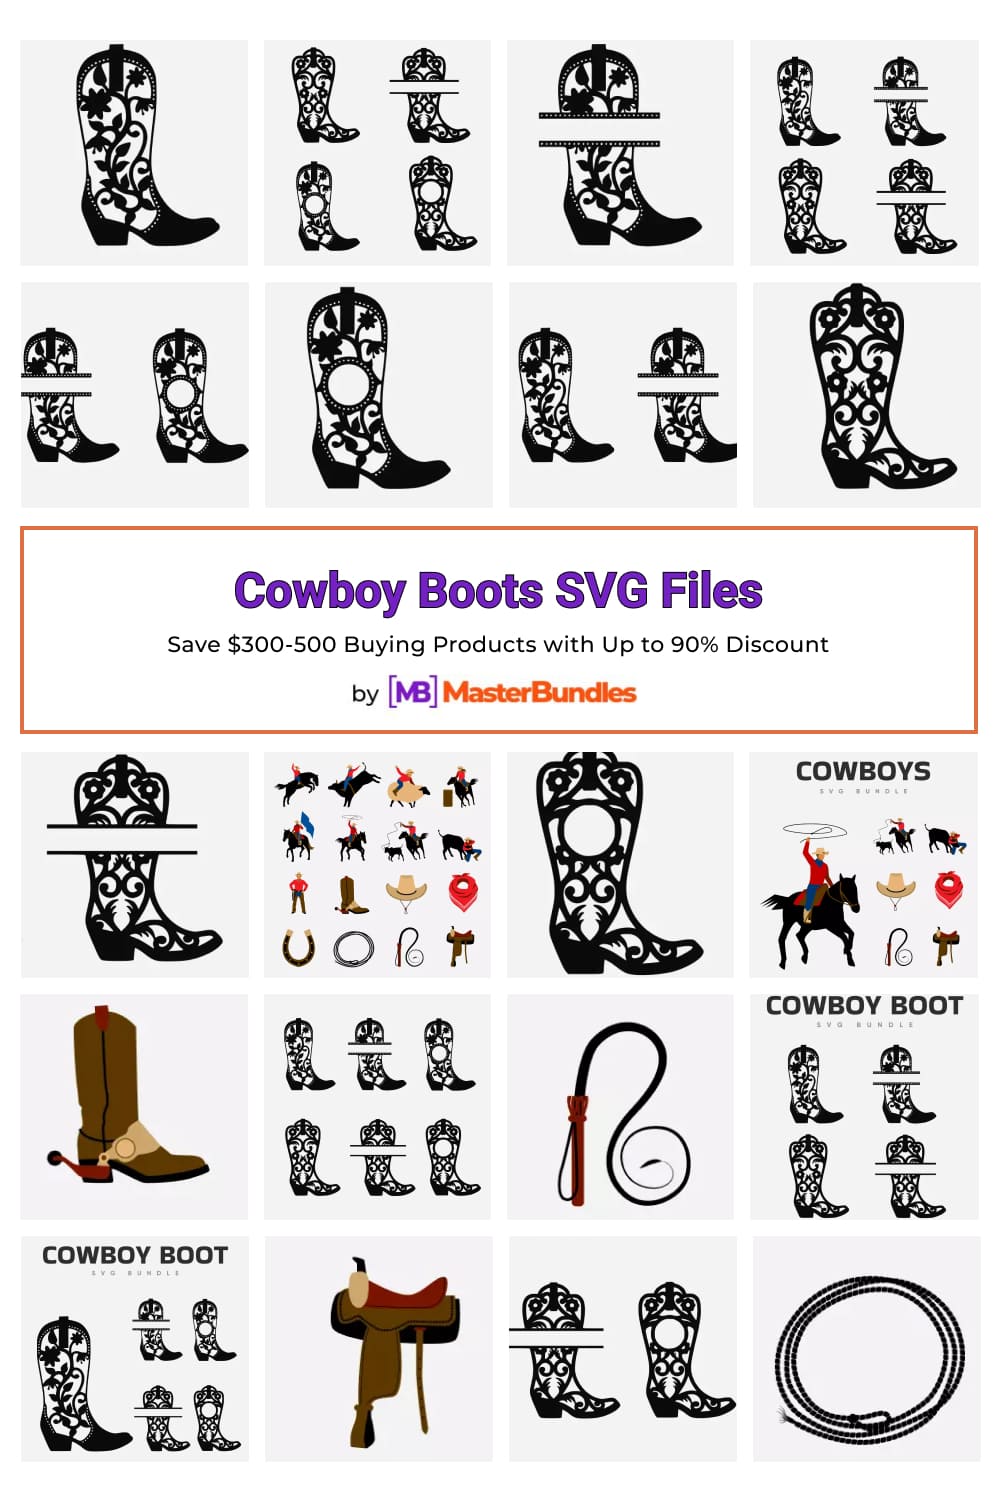 Cowboy Boots SVG Files Pinterest image.